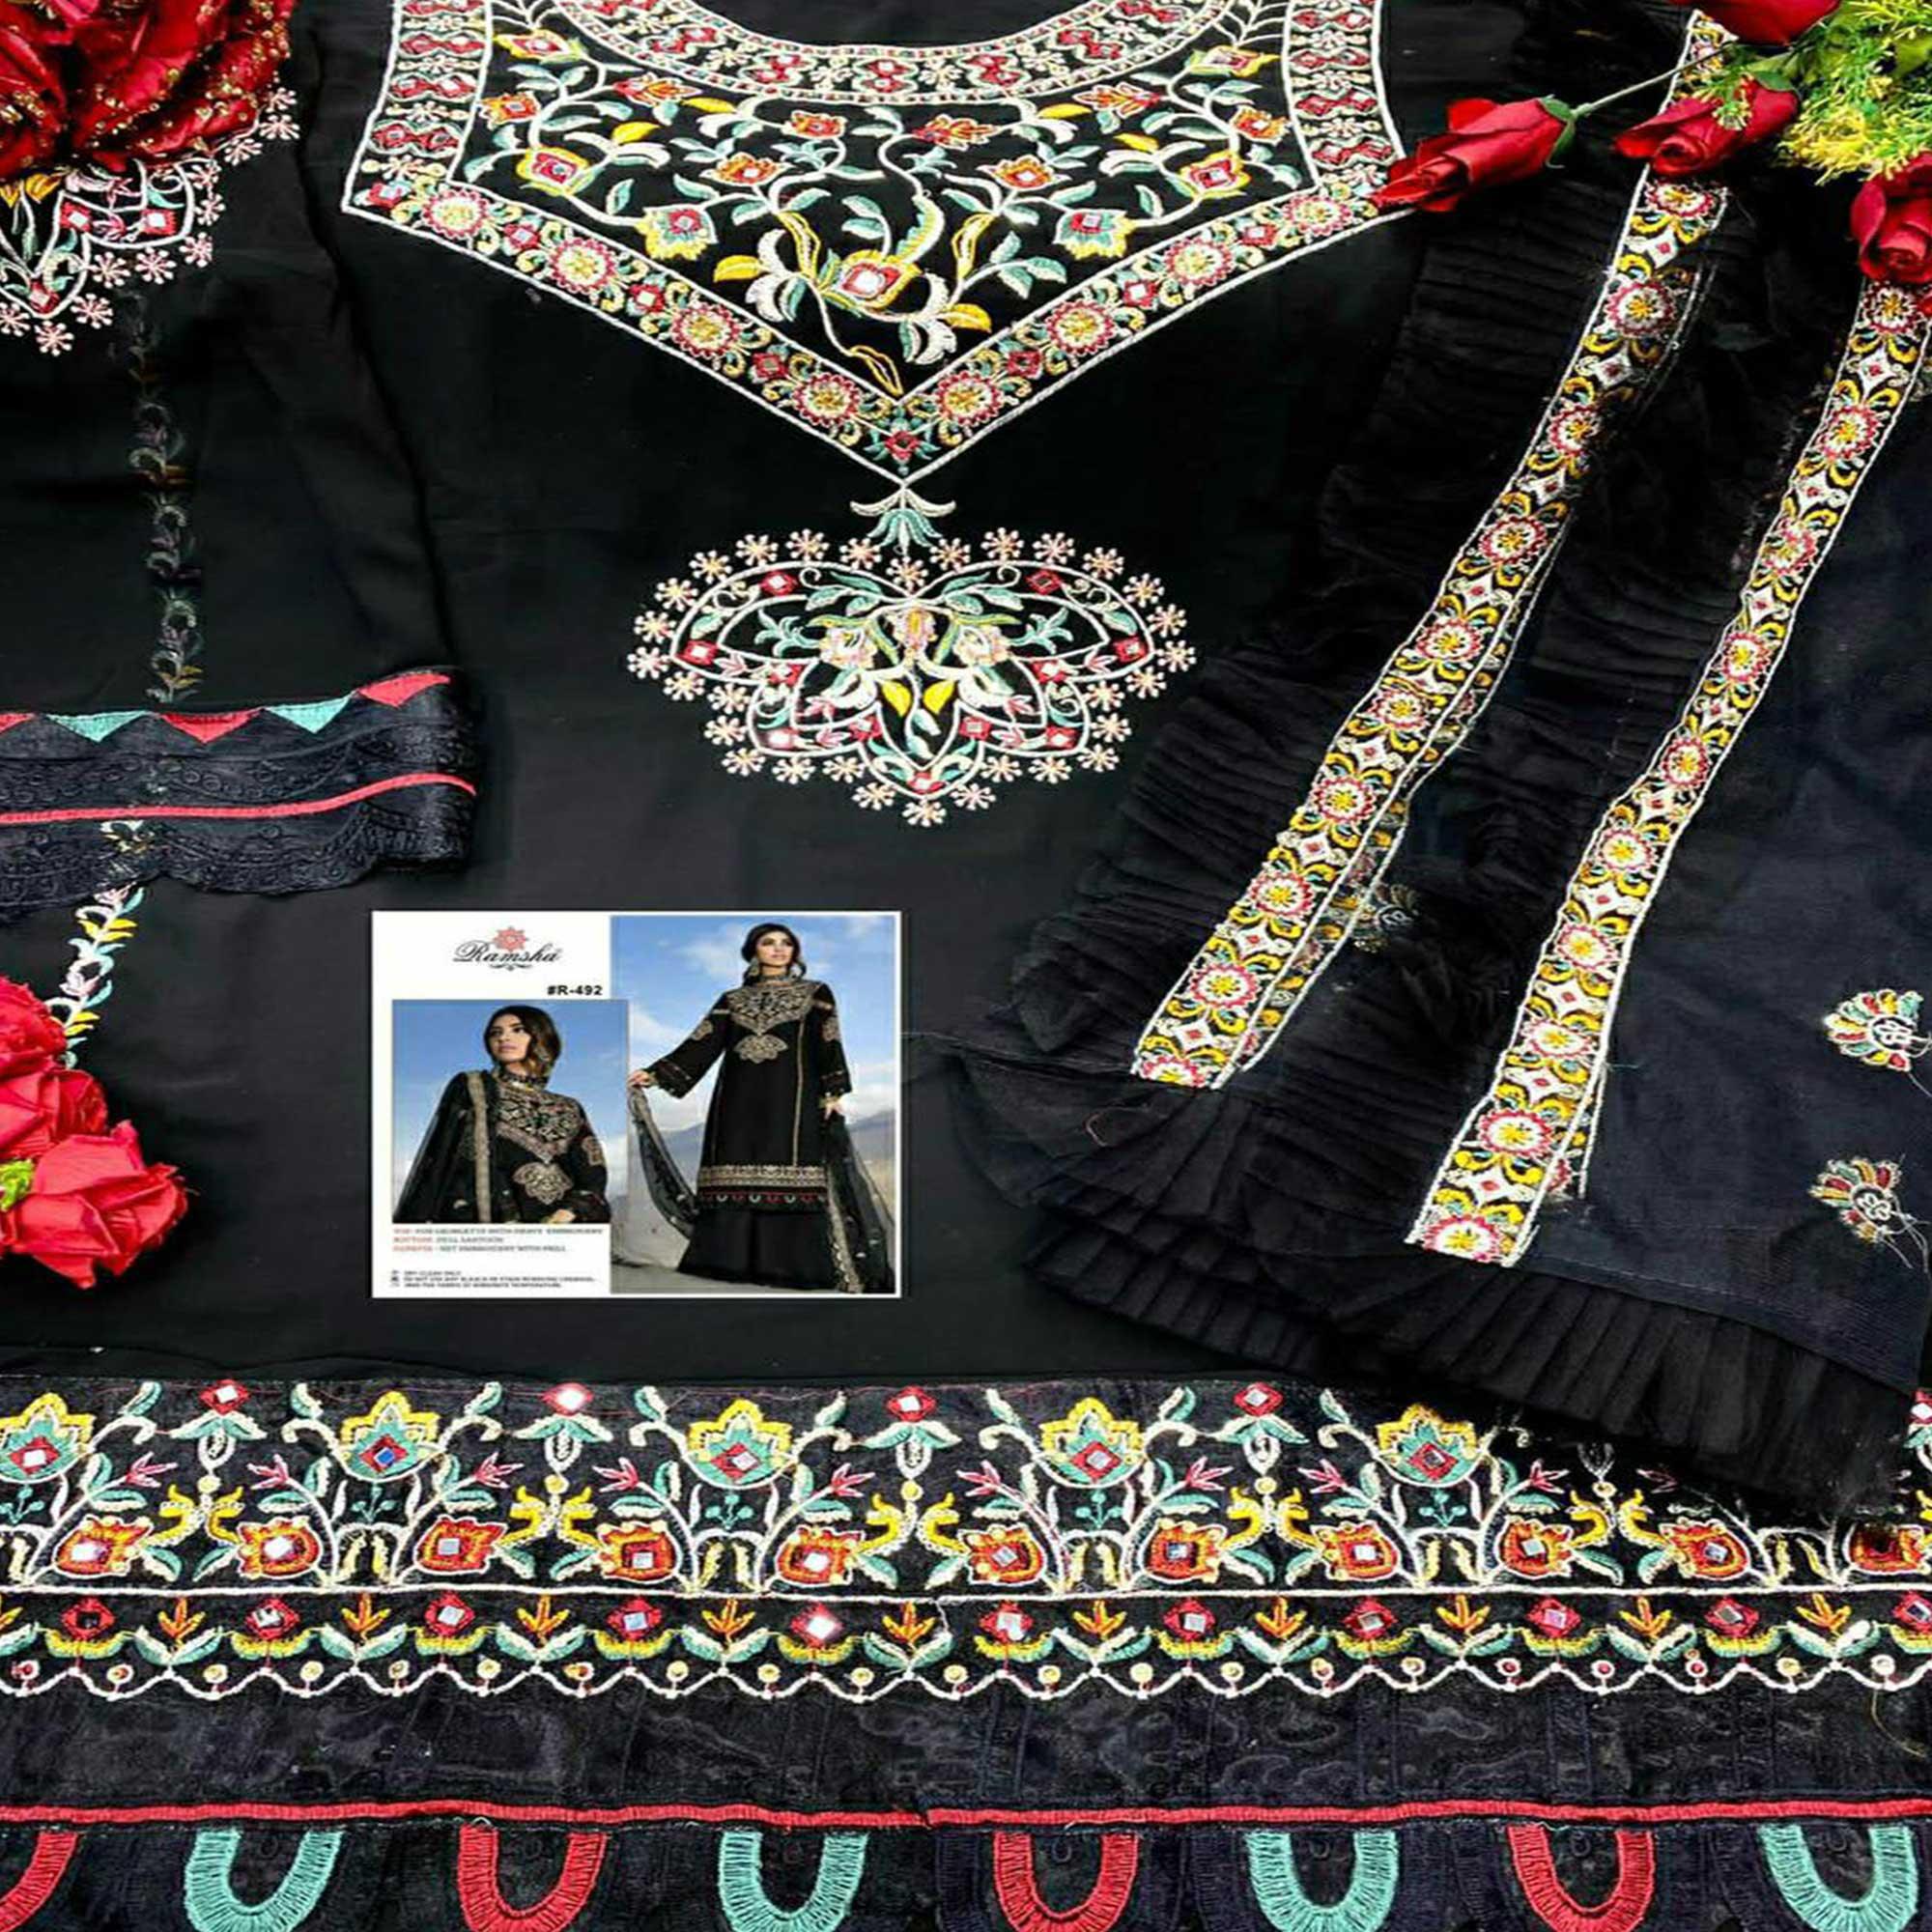 Black Embroidered Georgette Pakistani Suit - Peachmode